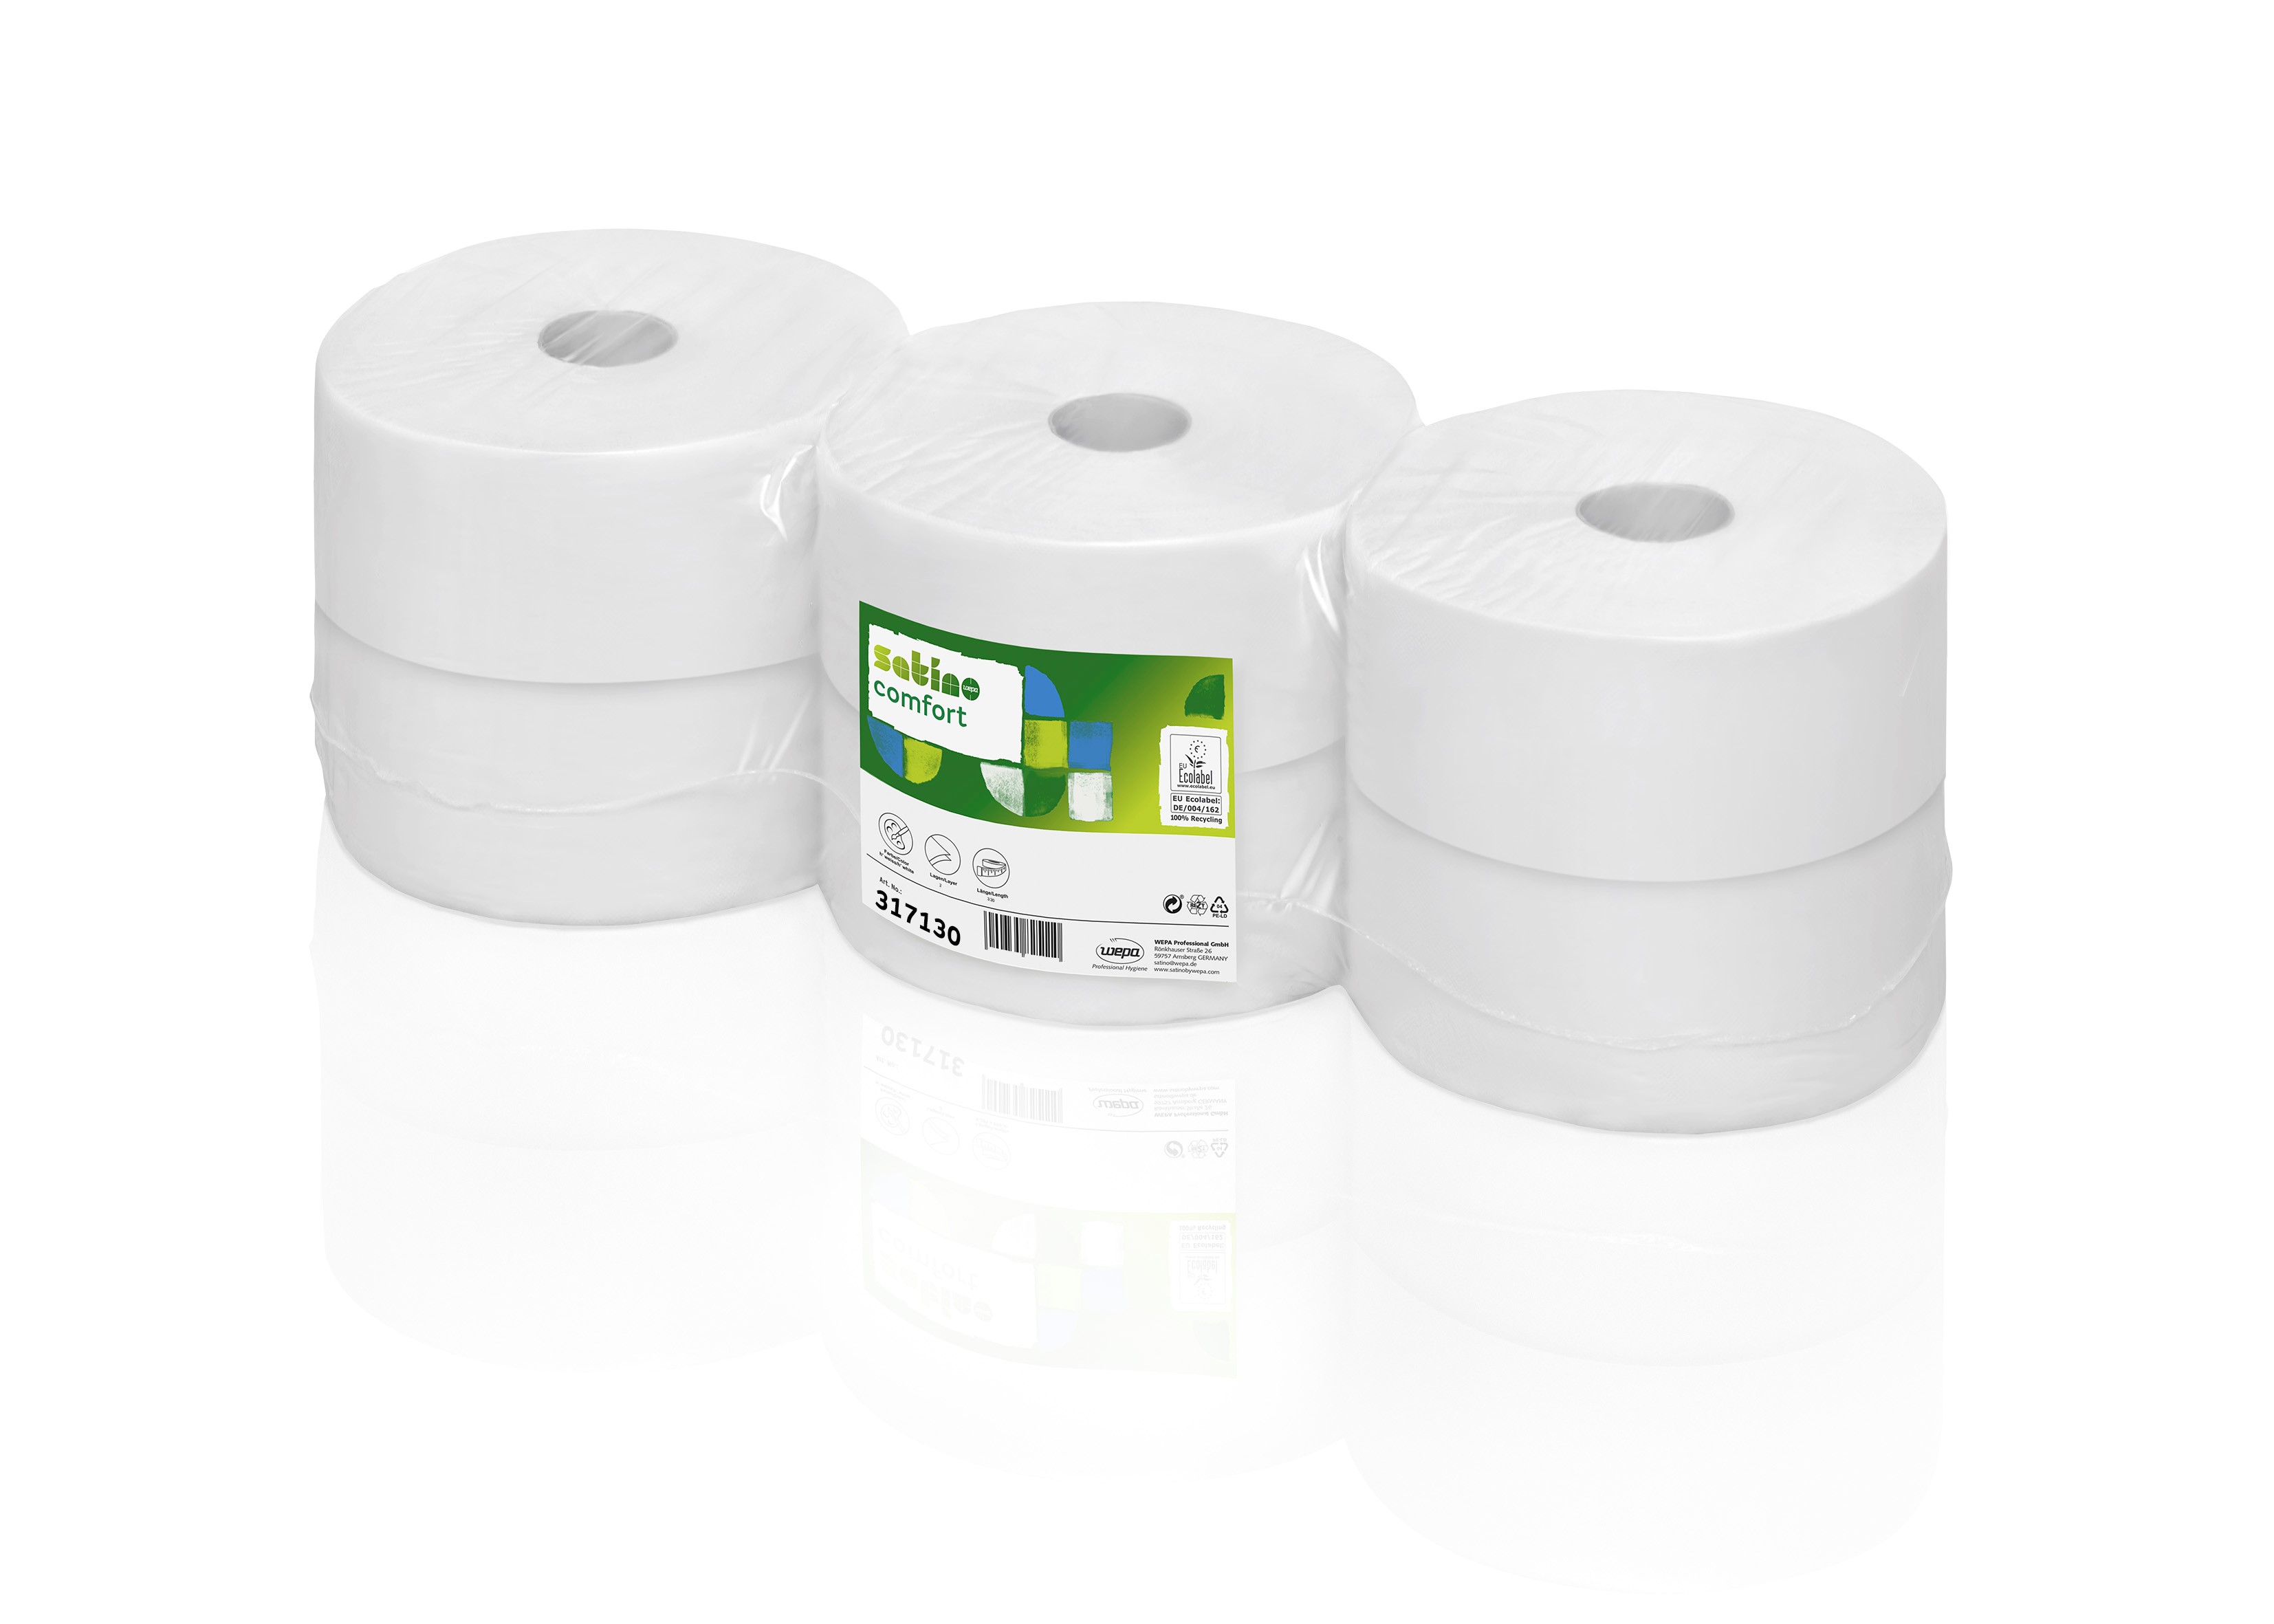 Produktbild: Toilettenpapier 2lg hochweiß RC Jumbo satino comfort 45 Pack (Palette)